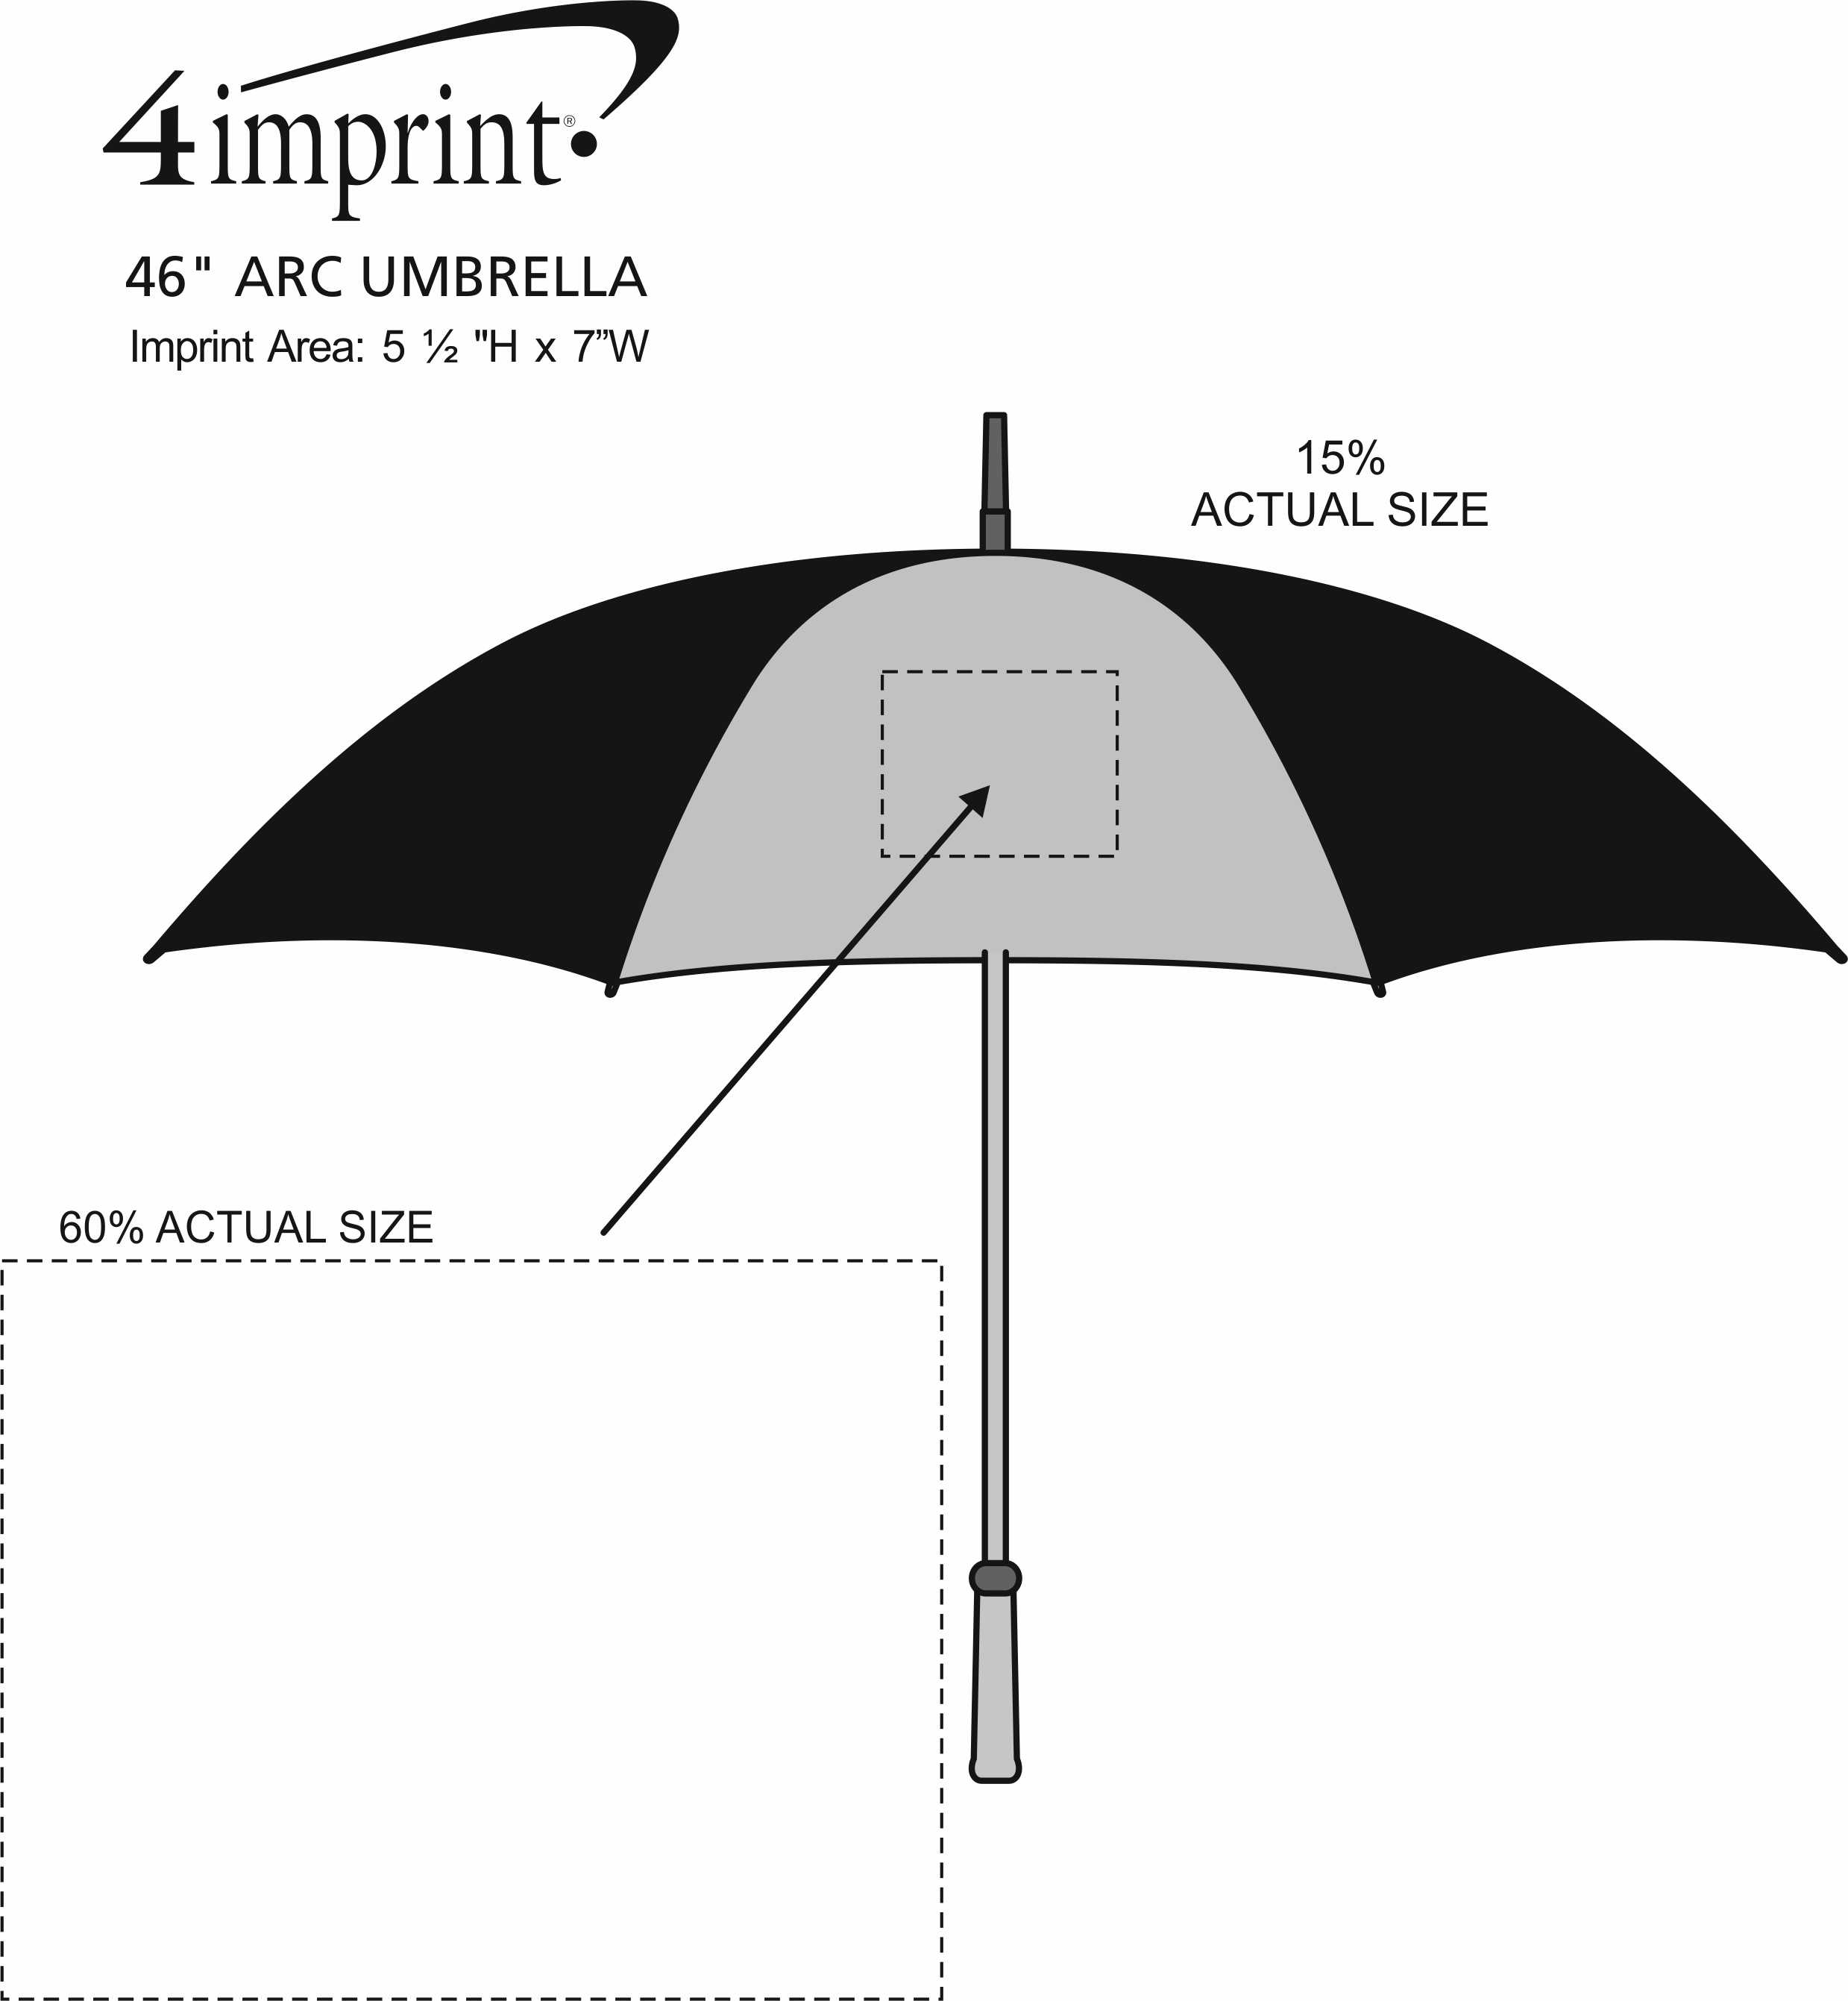 Imprint Area of Umbrella - 46" Arc